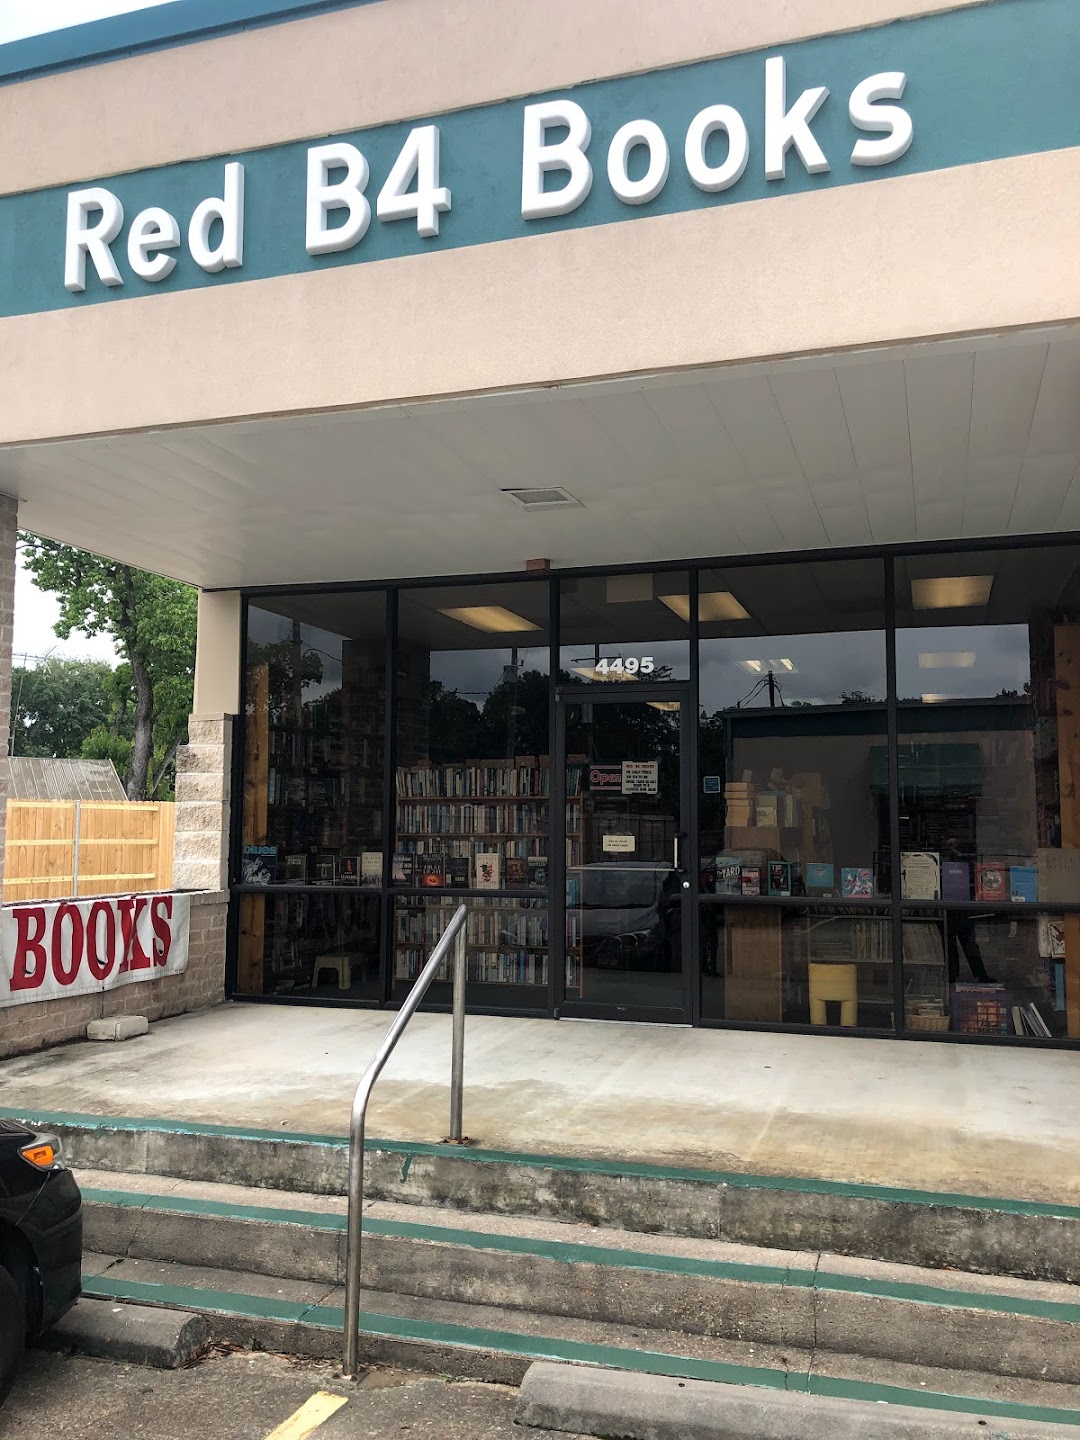 Red B4 Books